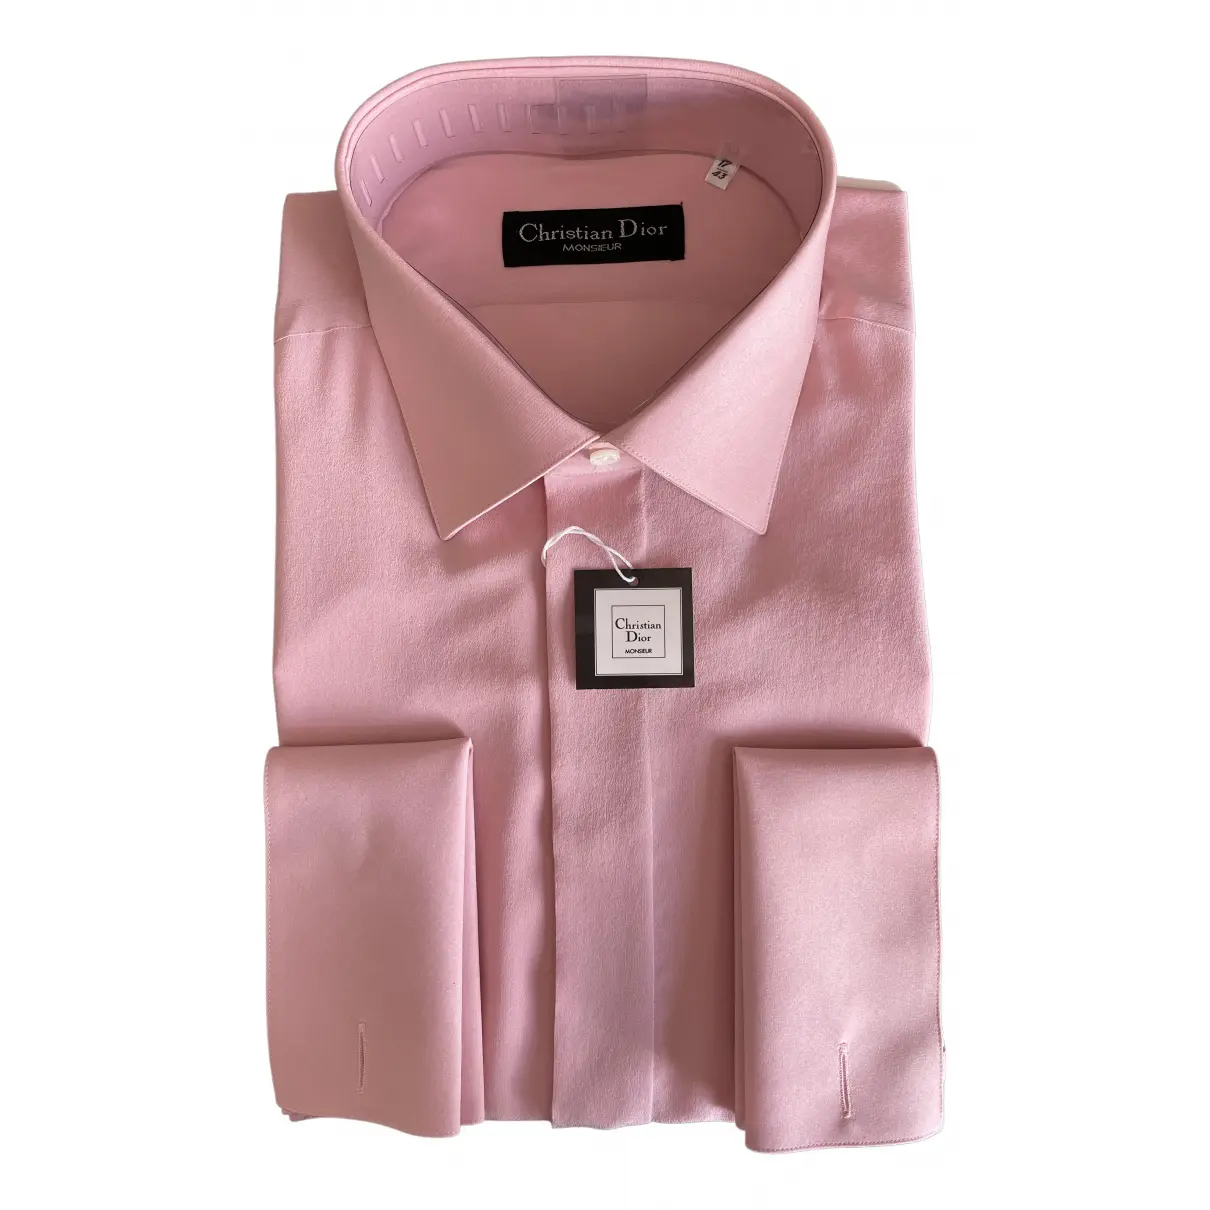 Buy Dior Homme Silk shirt online - Vintage